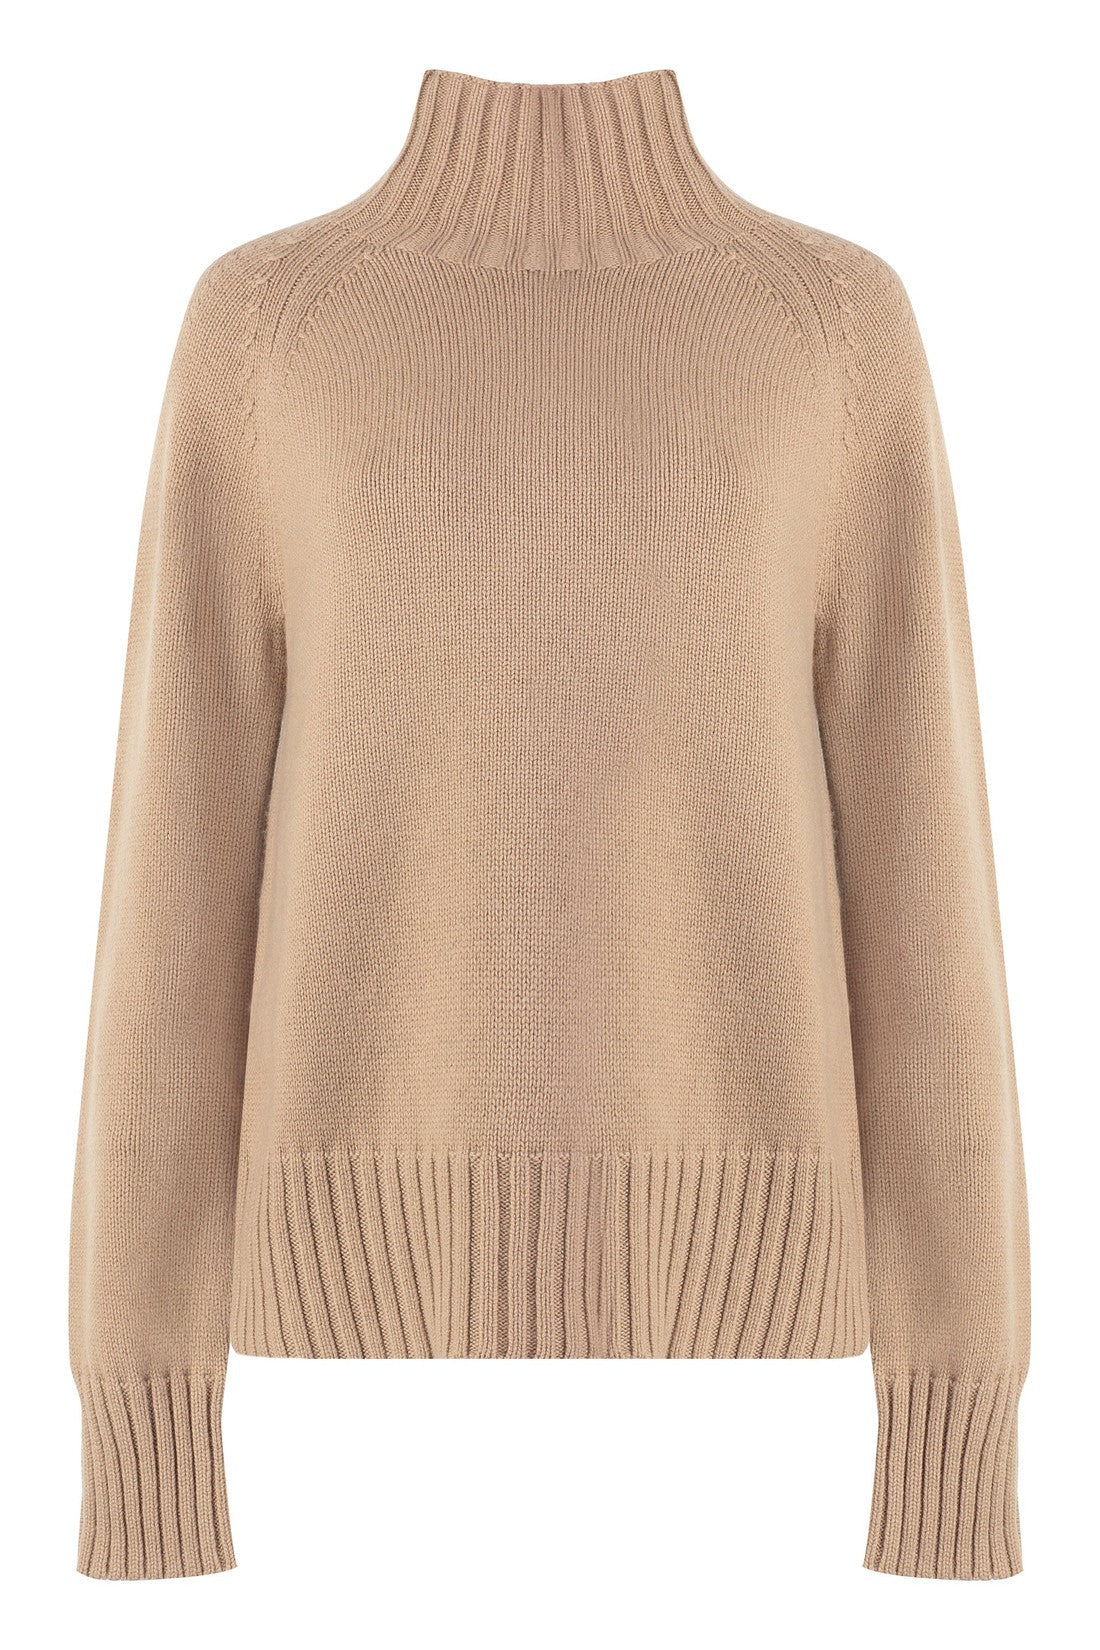 S MAX MARA-OUTLET-SALE-Mantova Wool blend turtleneck sweater-ARCHIVIST